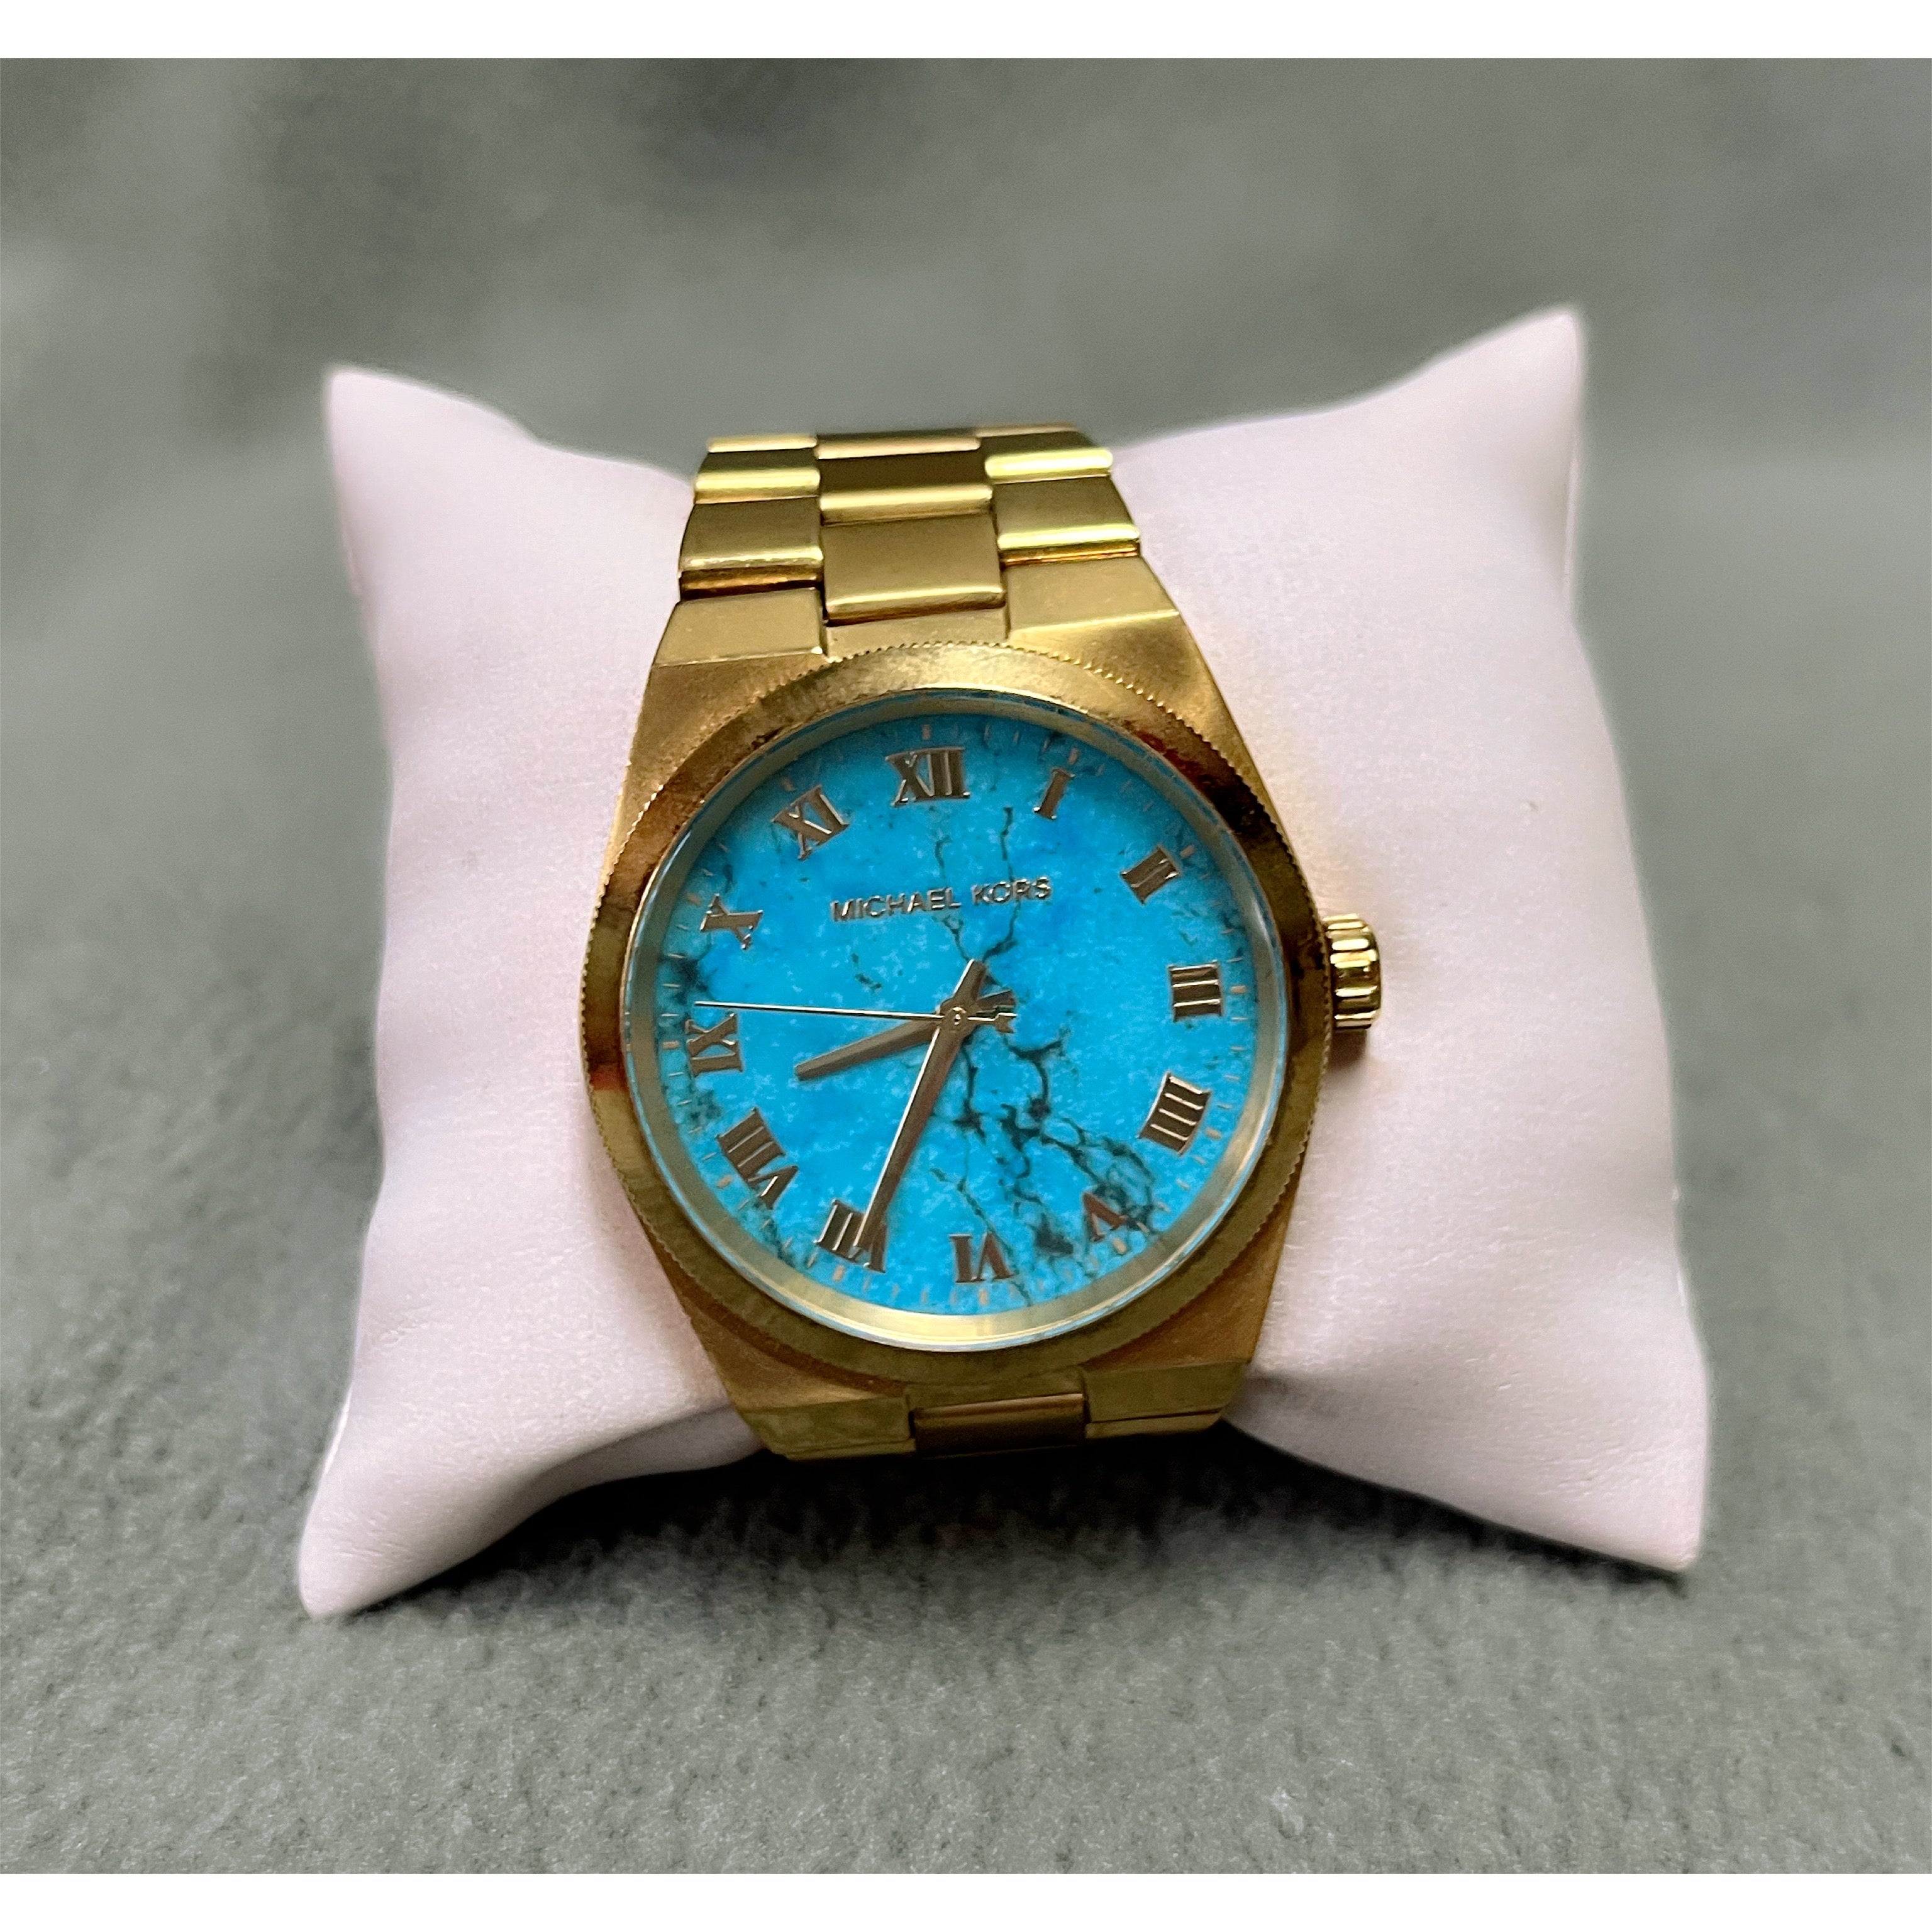 Michael Kors Lennox gold-tone watch